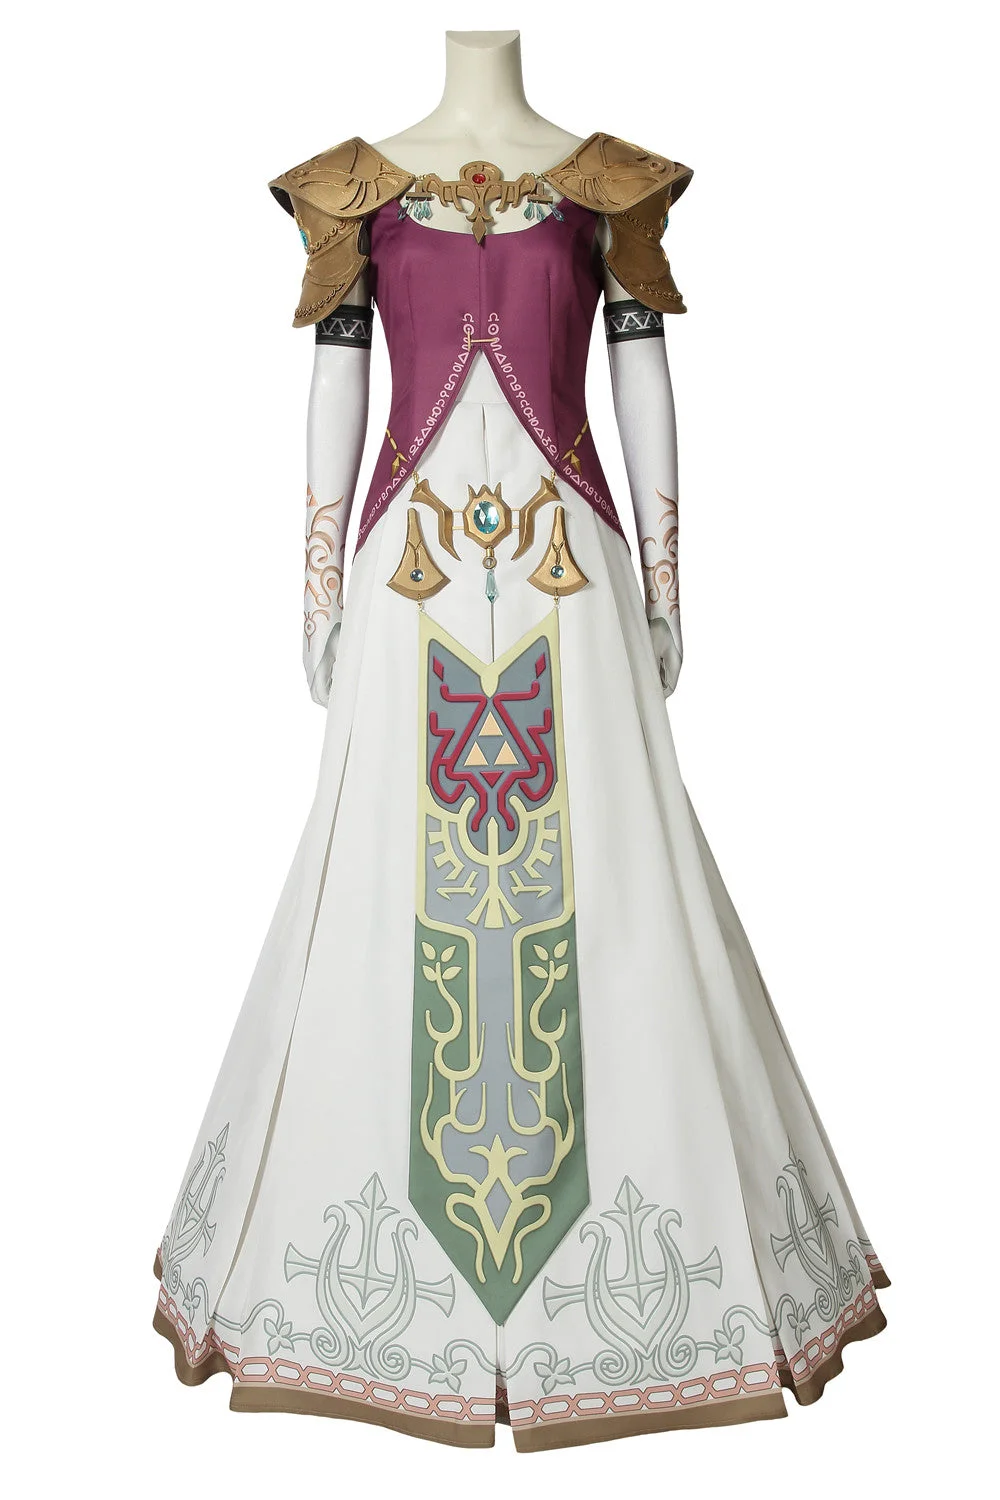 Twilight Princess Cosplay Costumes The Legend of Zelda Classic Cosplay Suit